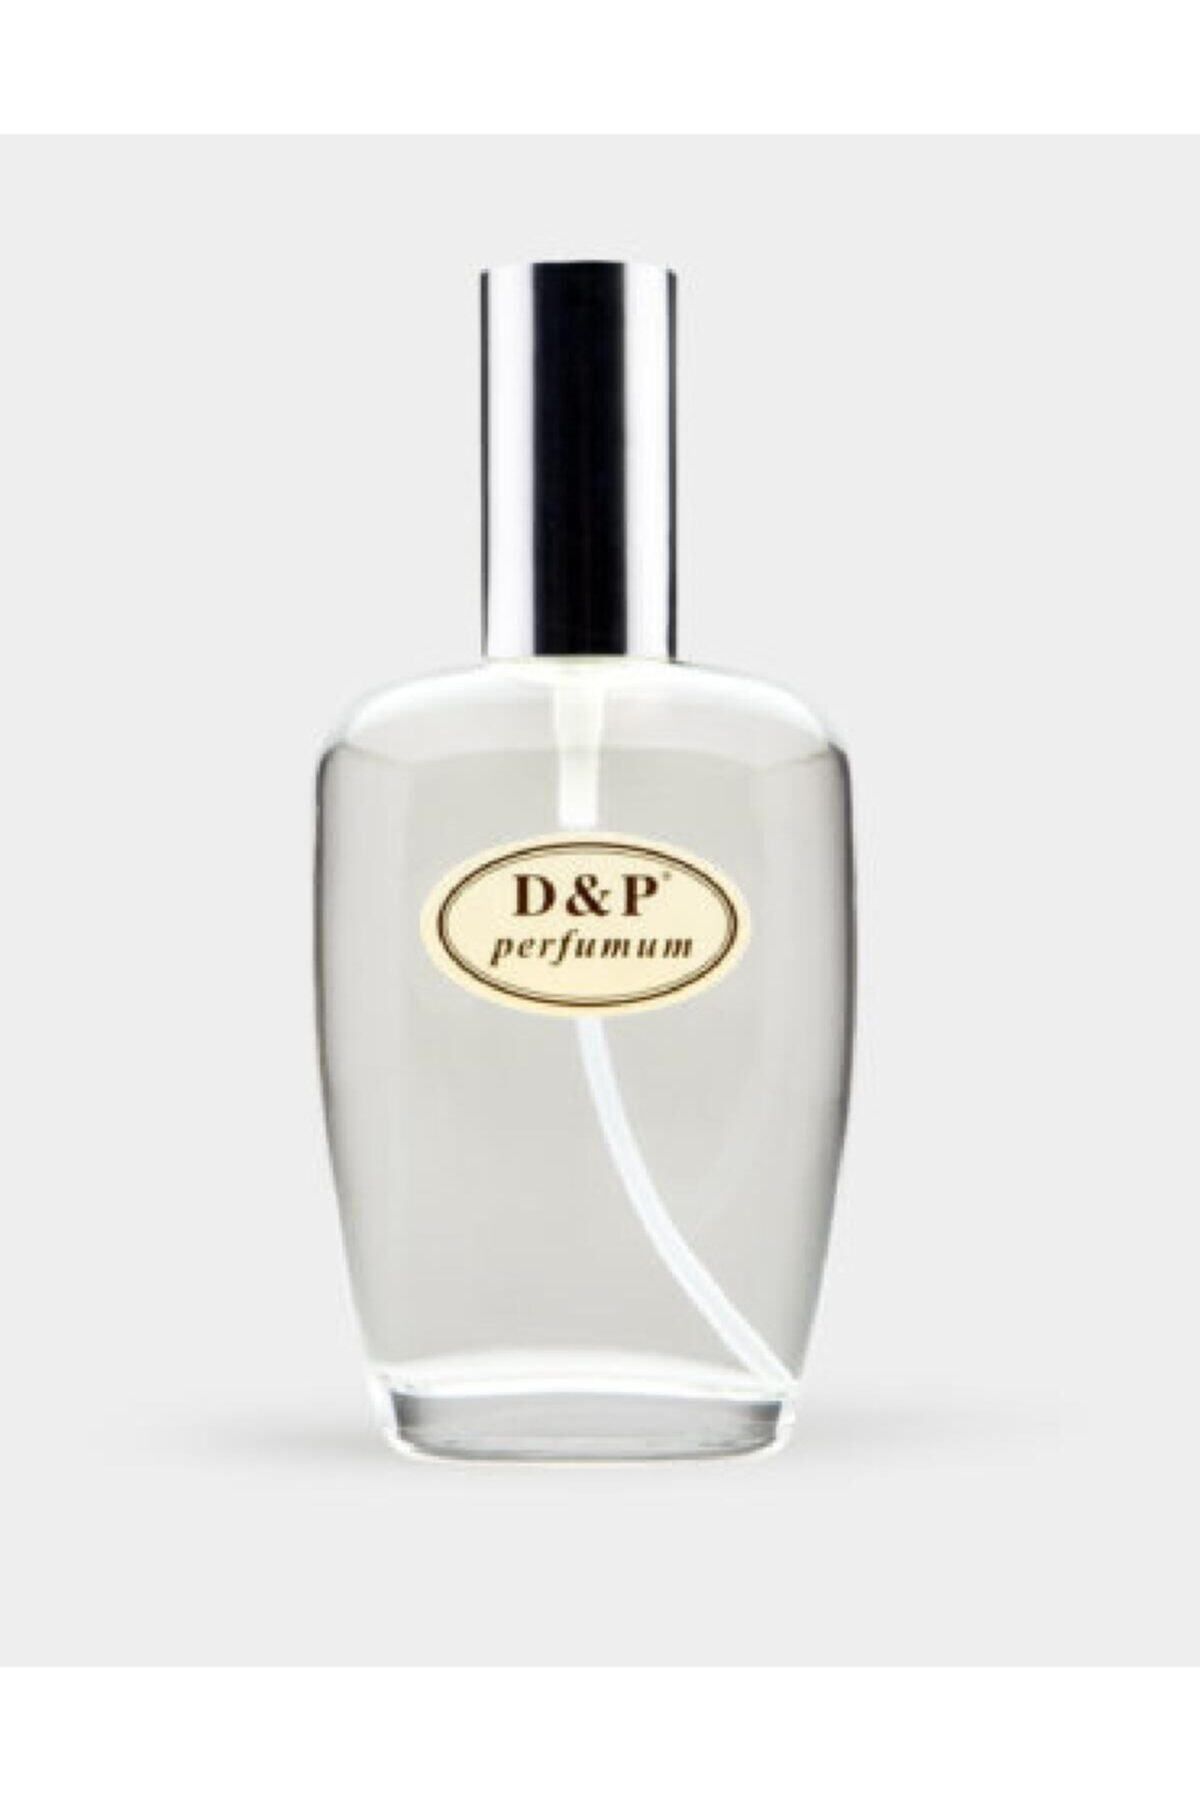 D&P Perfumum C33 Kadın Parfüm Edp 50 ml